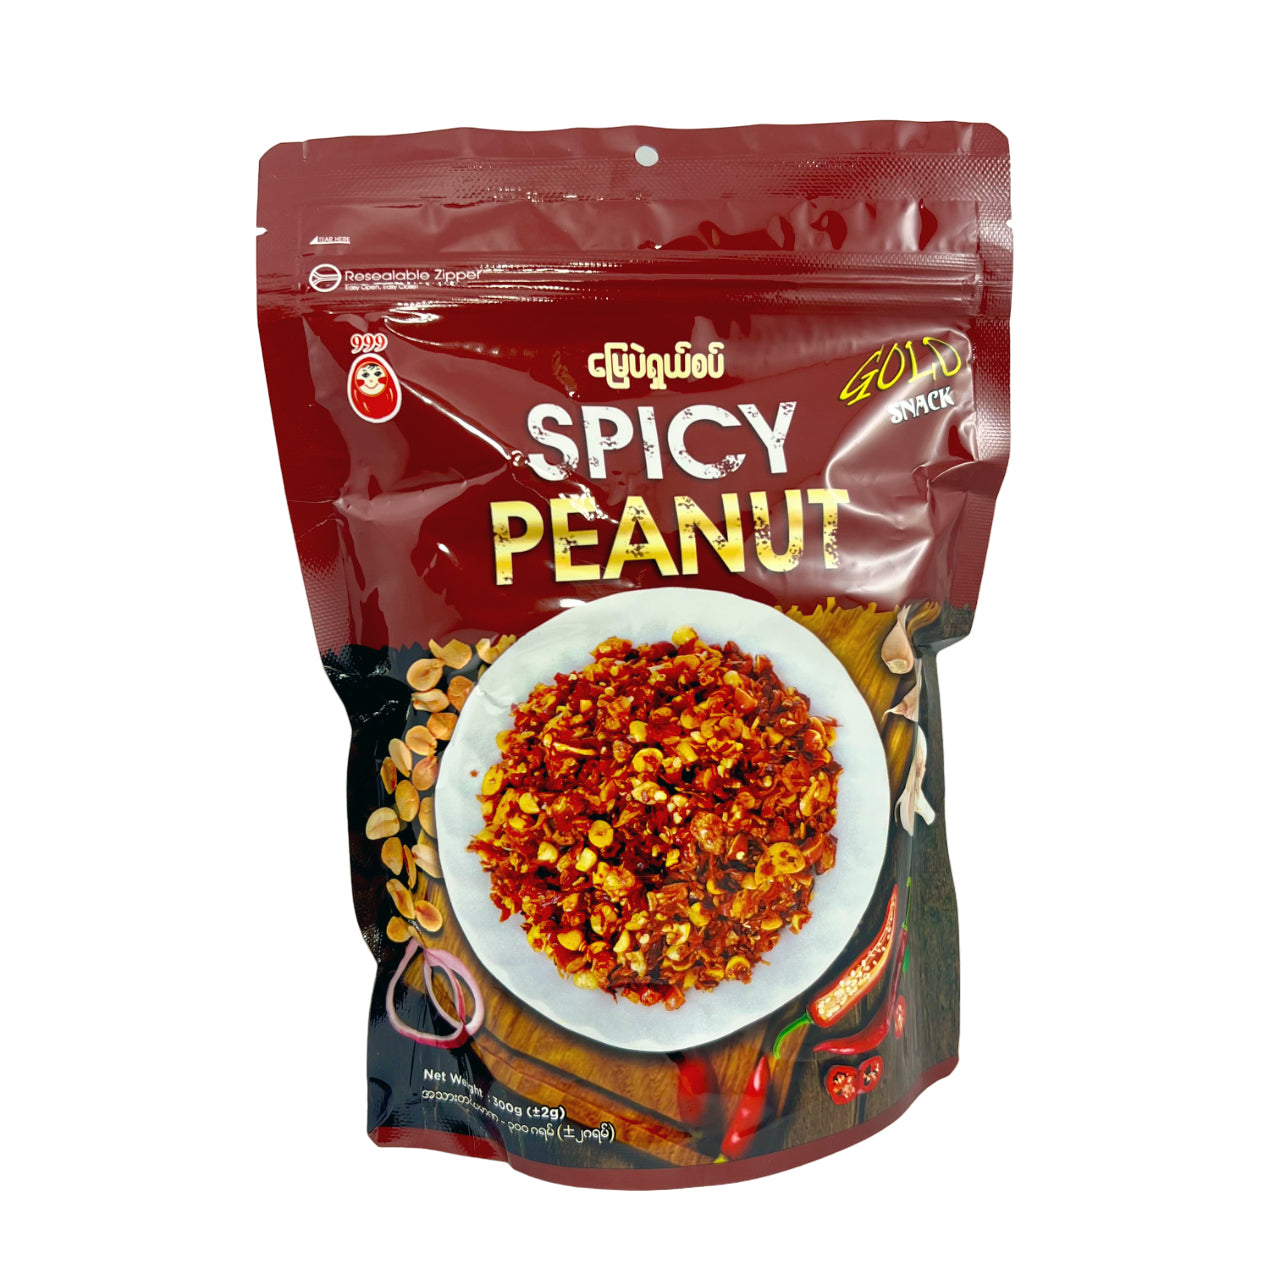 Gold Snack - Spicy Peanut မြေပဲငရုပ်သီးကြော် (မြေပဲရှယ်စပ်) 300g